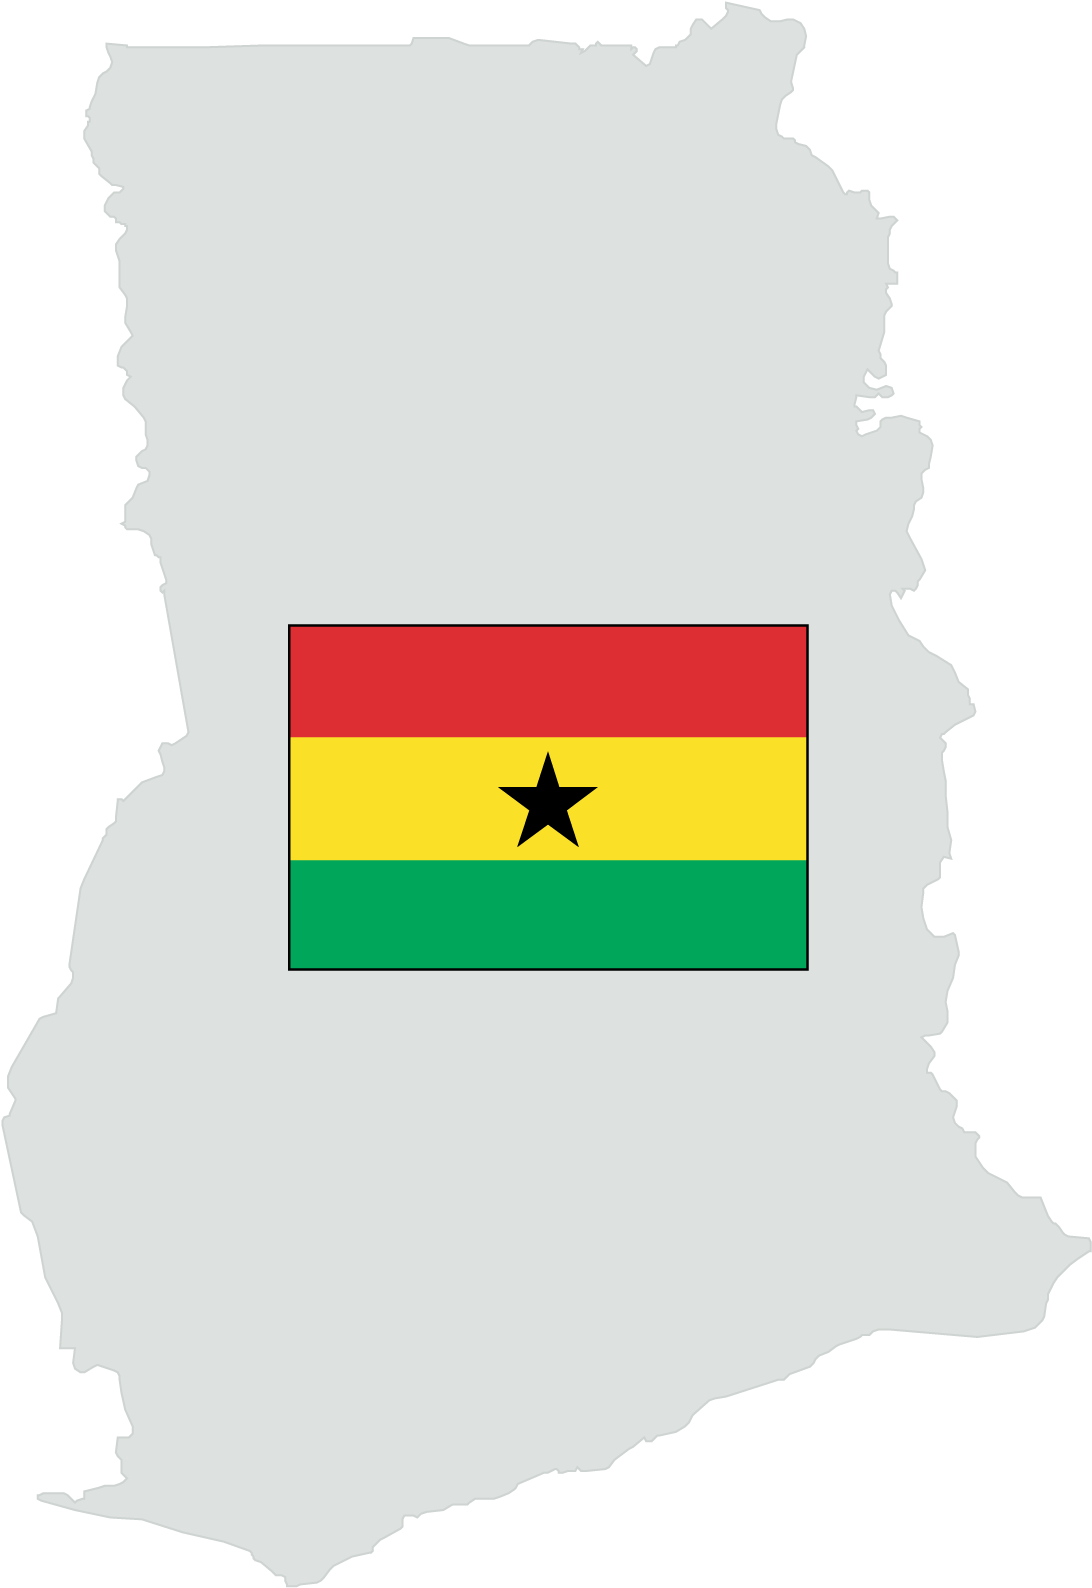 Ghana Mapand Flag PNG image